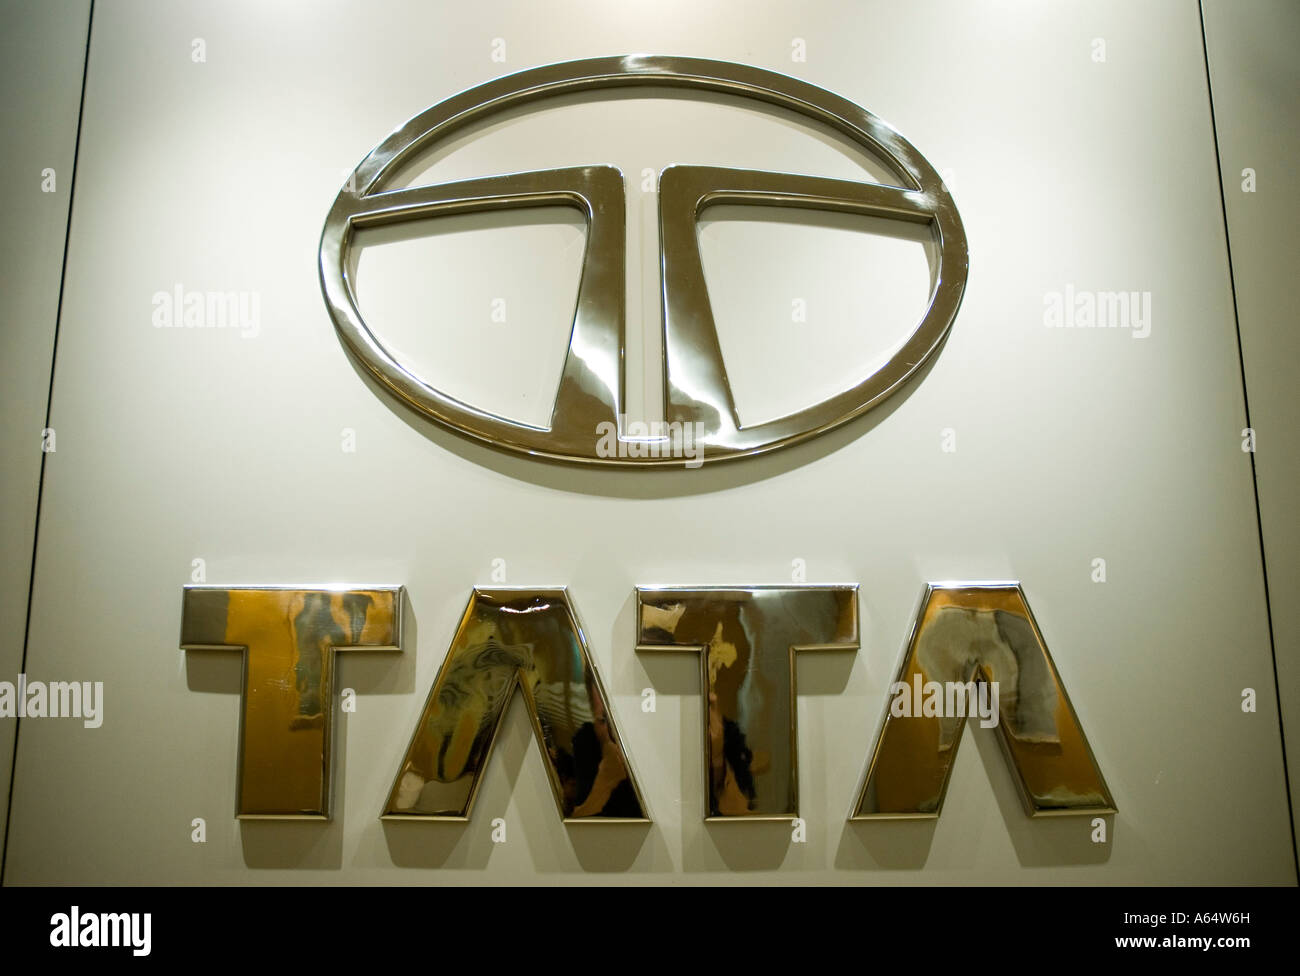 Tata-Logo-Schild Stockfoto